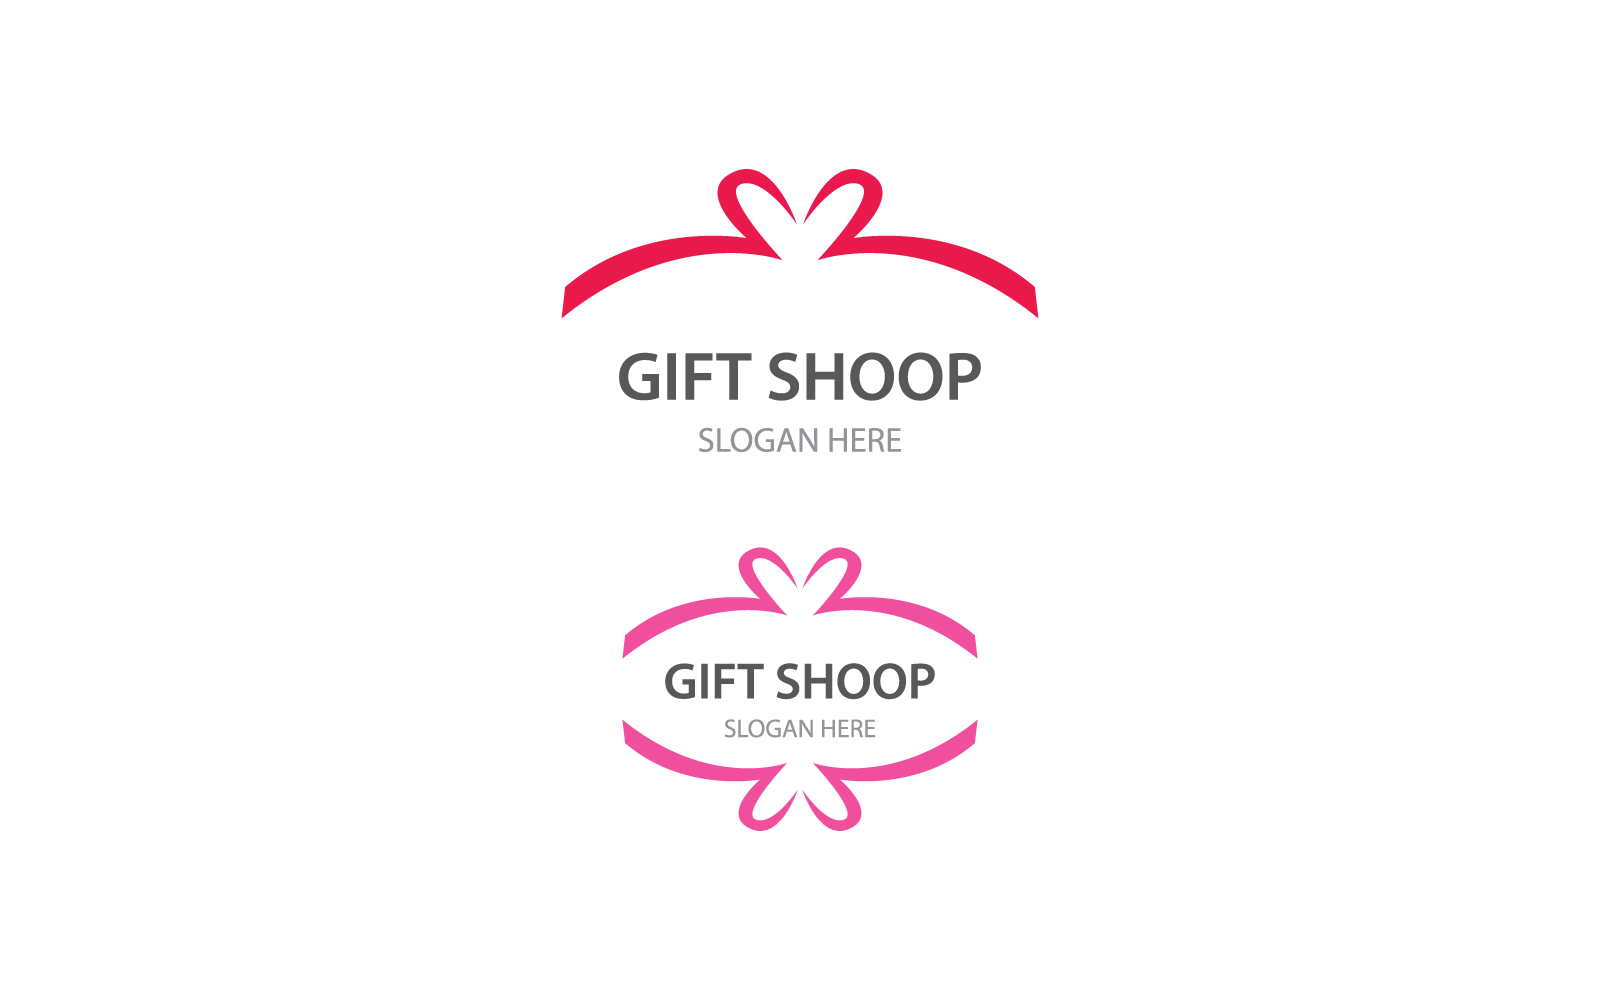 Gift Box, gift shop logo icon illustration template